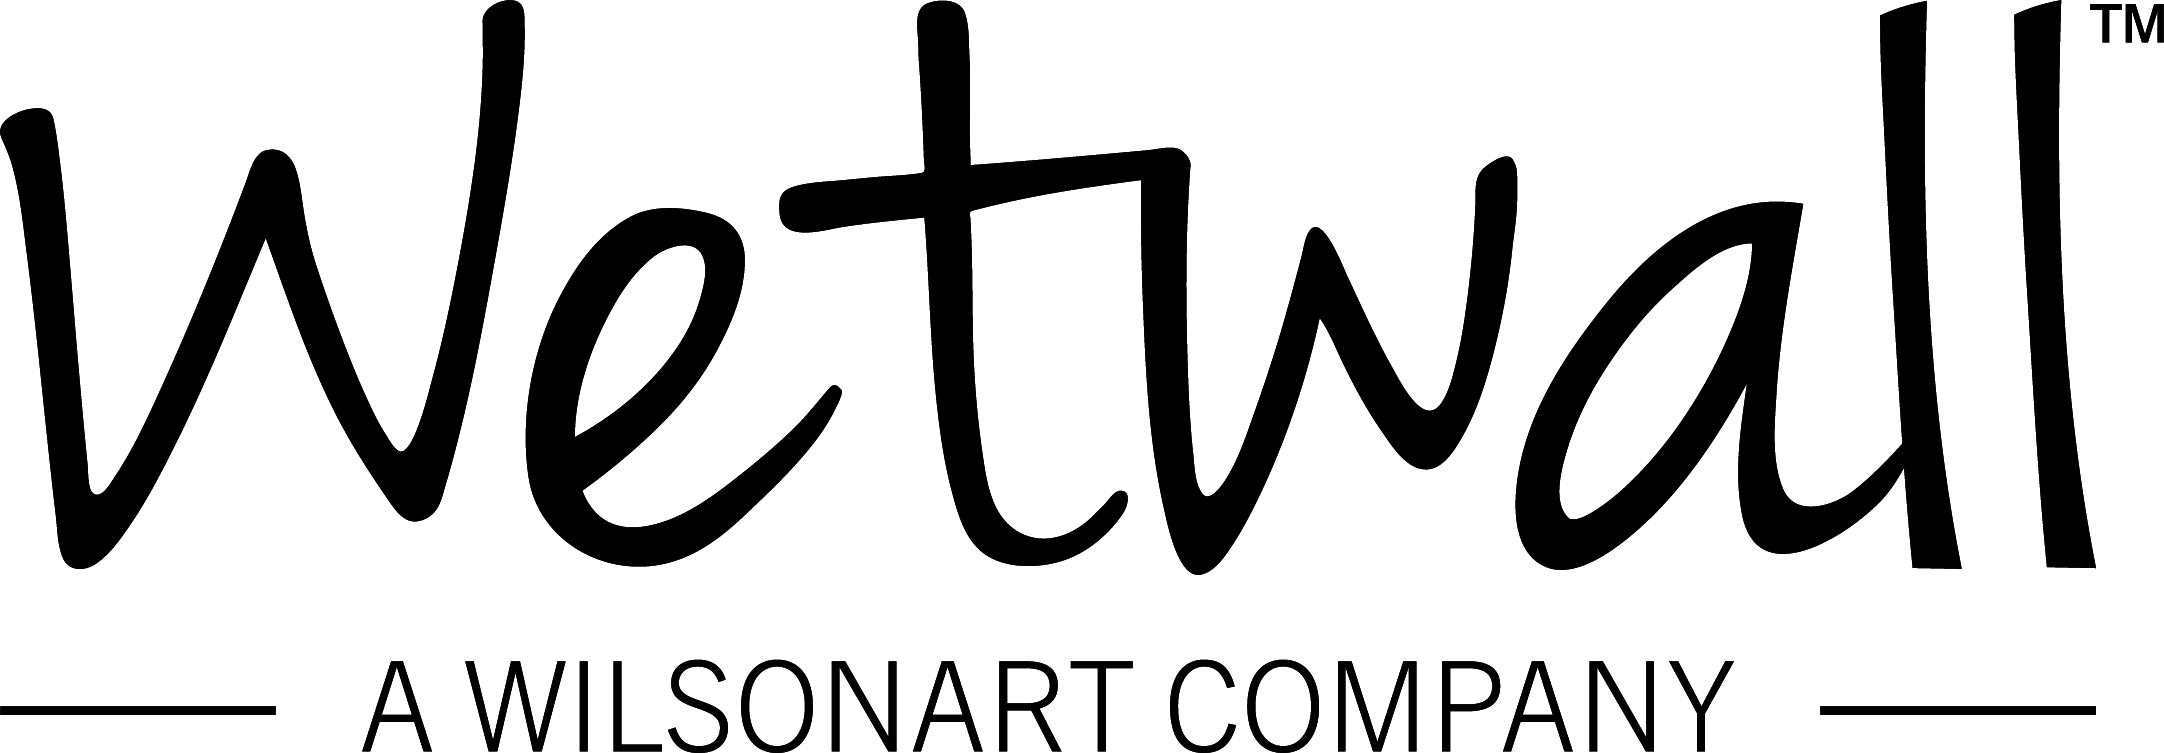 wetwall logo black